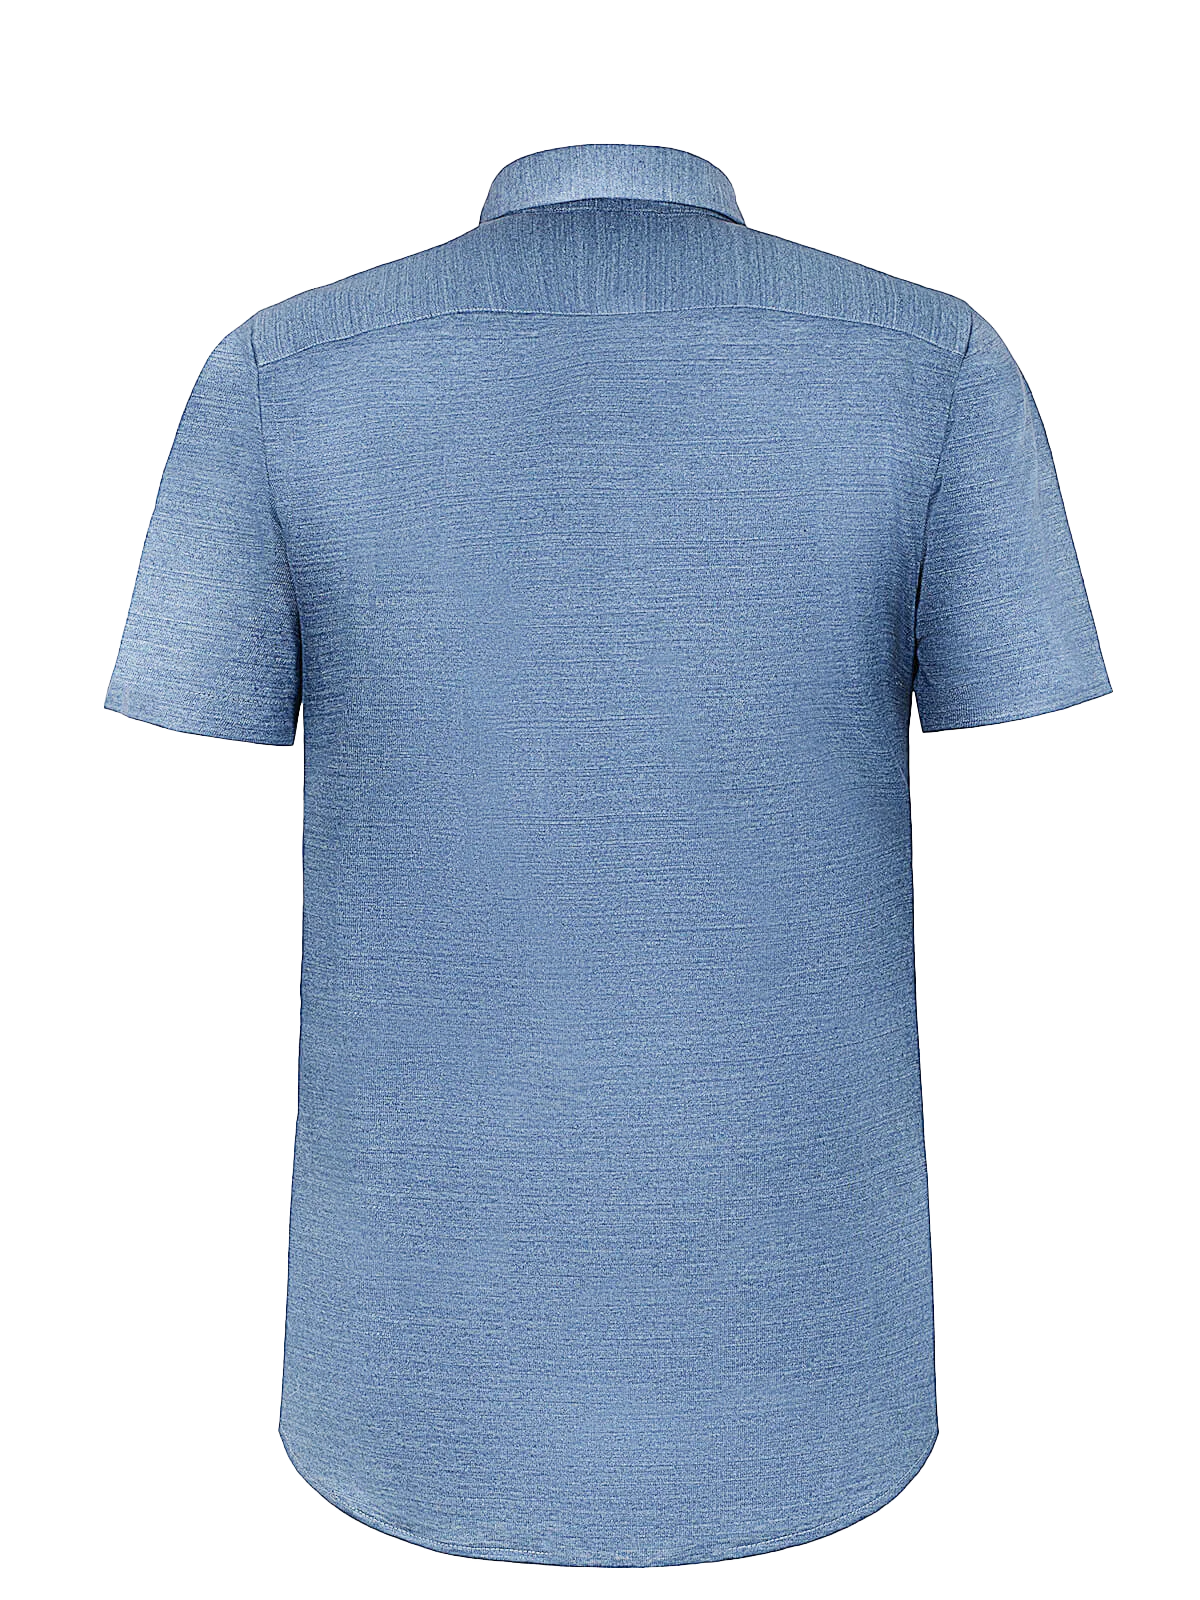 Camicia Short Sleeve 100% Capri jeans linen shirt back